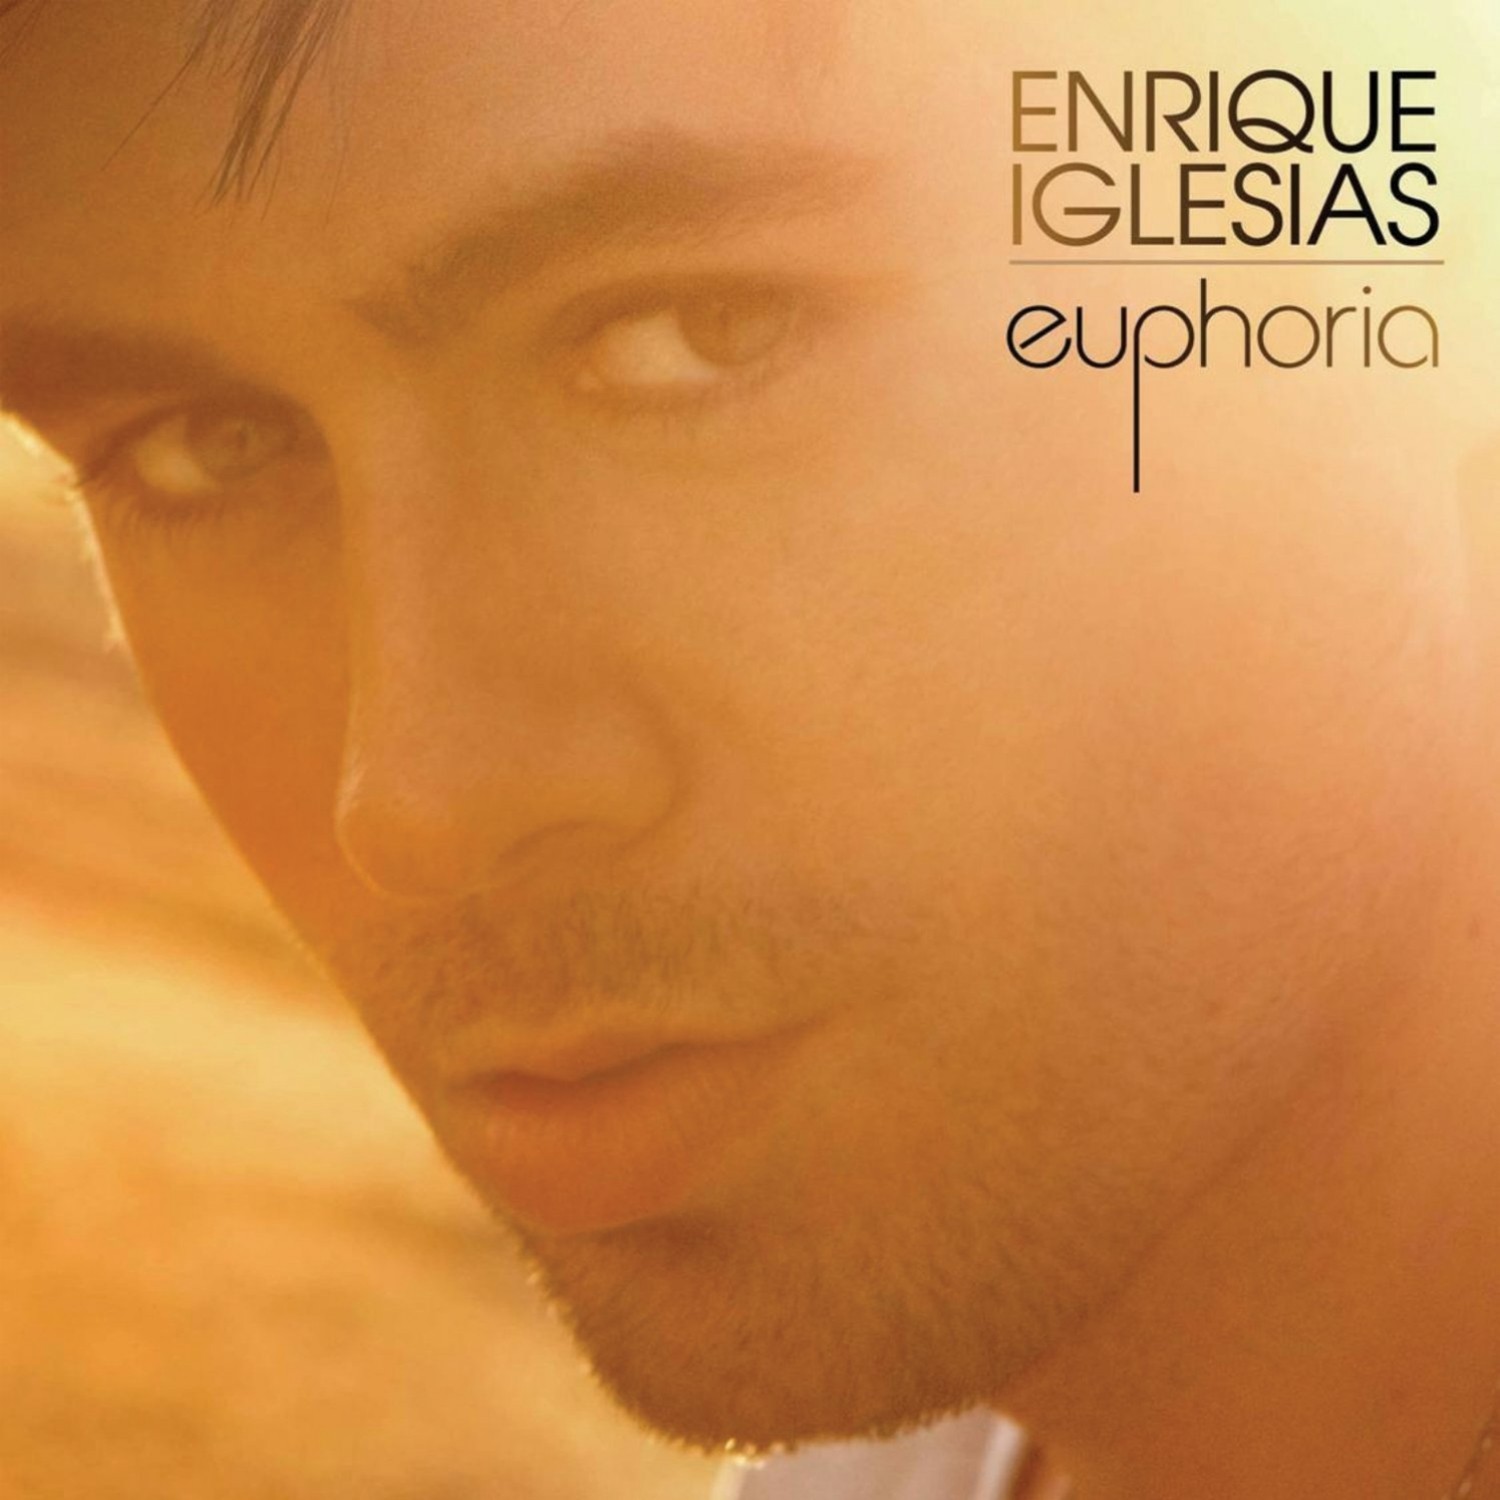 http://3.bp.blogspot.com/_Pnt9wNqjwNA/THtCJT24u9I/AAAAAAAAA-g/oxaHm6aKUlY/s1600/Enrique+Iglesiass+-+Euphoria.jpg